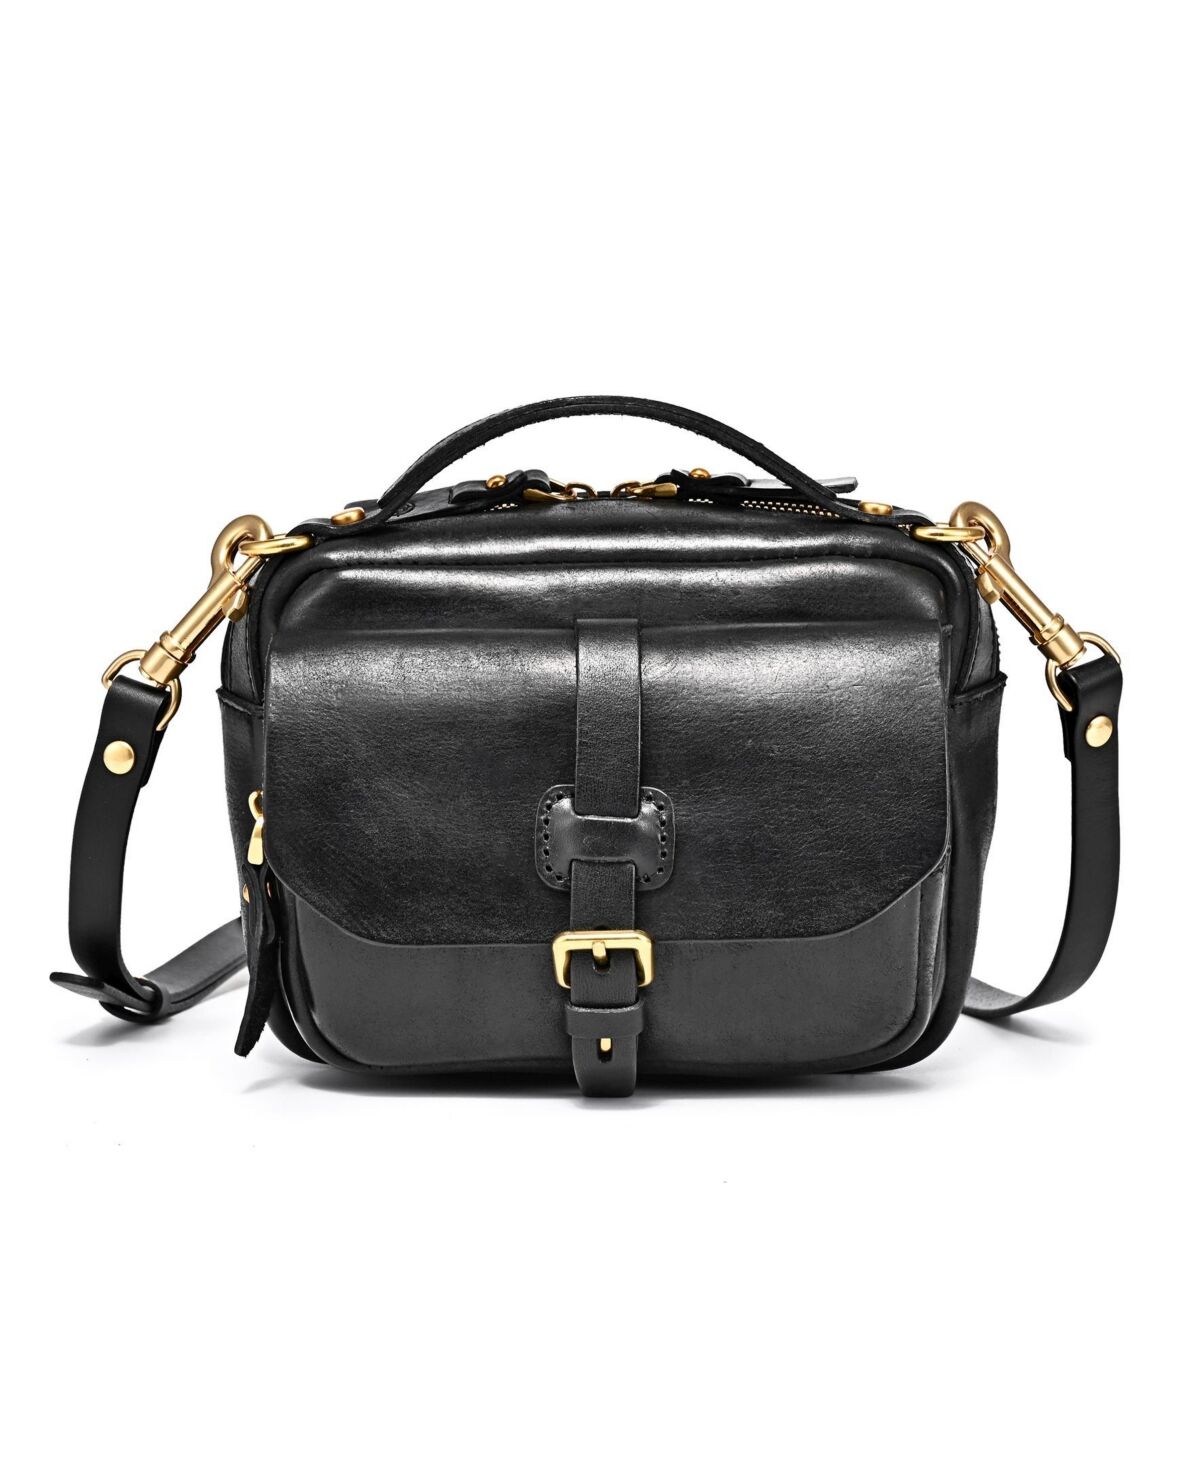 Old Trend Women's Genuine Leather Focus Cross body Bag - Black